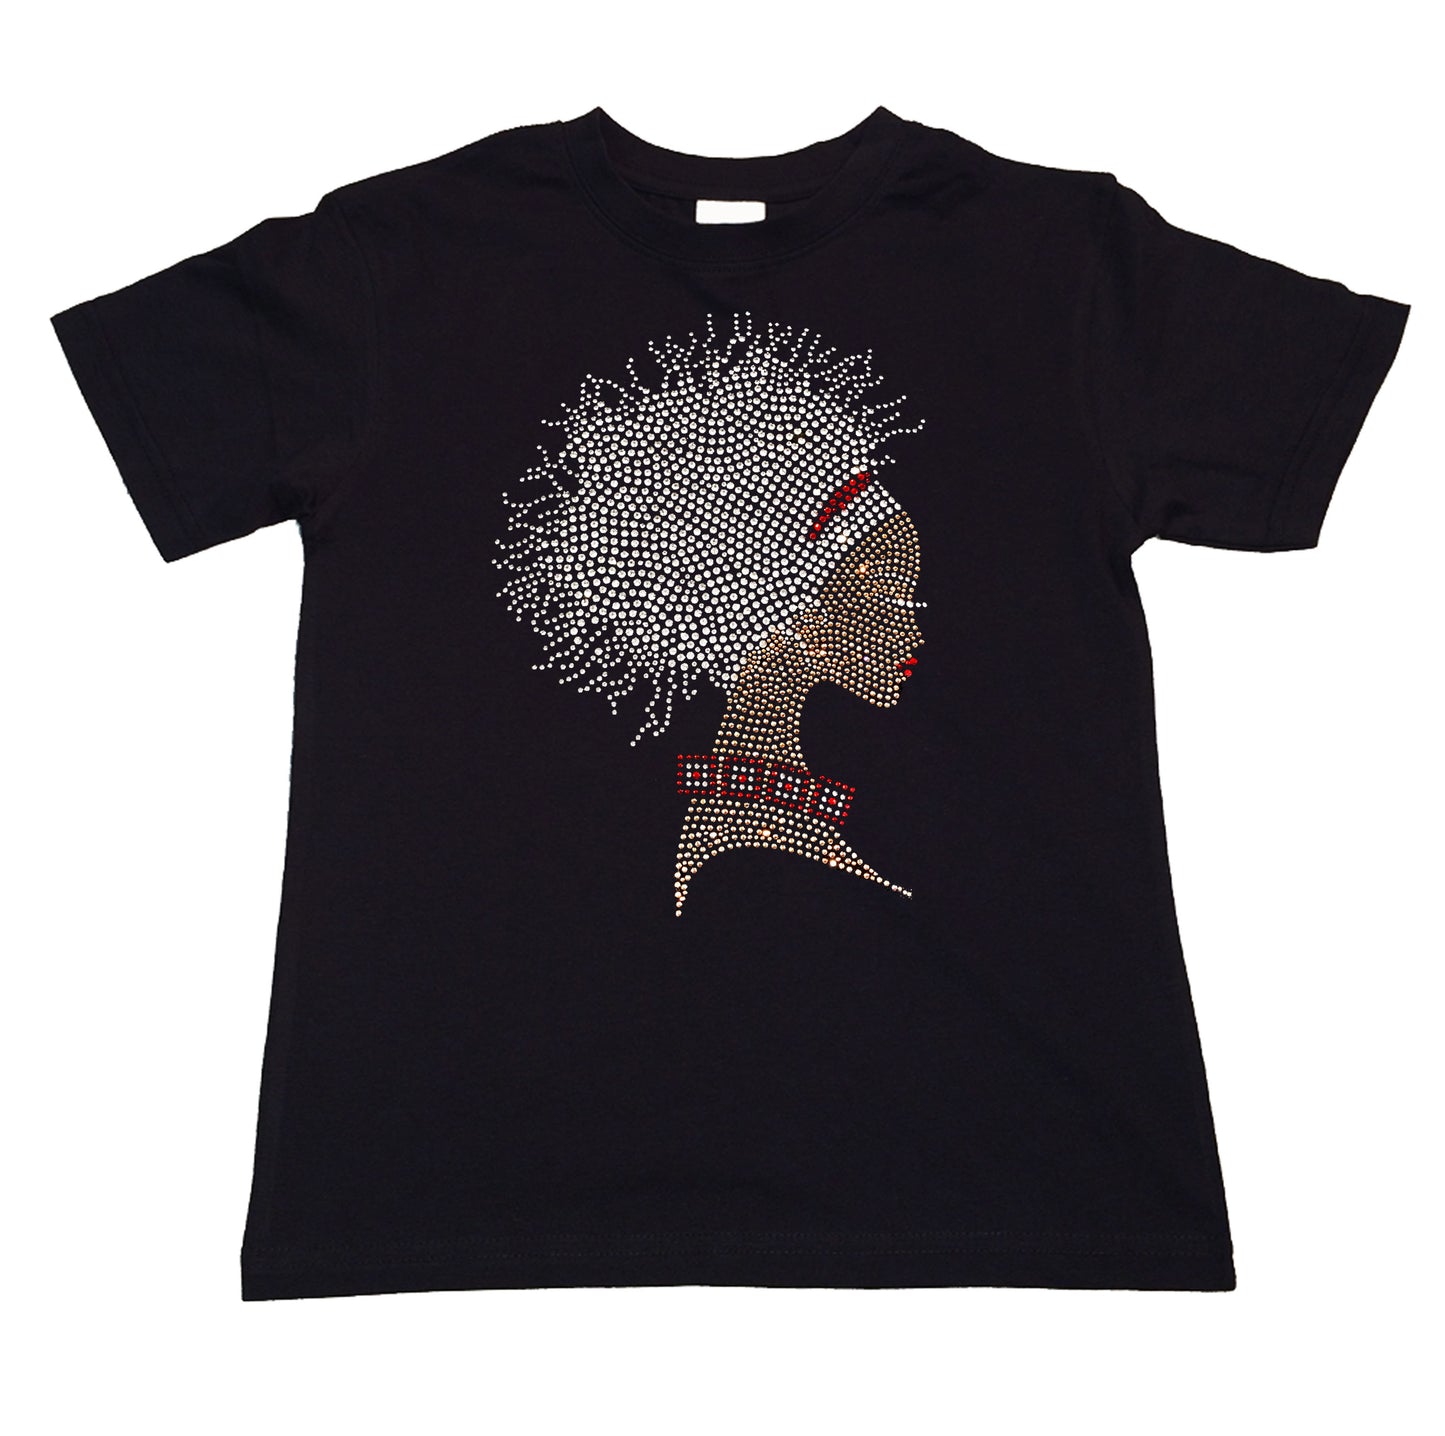 Girls Rhinestone T-Shirt " Afro Dreds Locks Girl in Rhinestones " Kids Size 3 to 14 Available